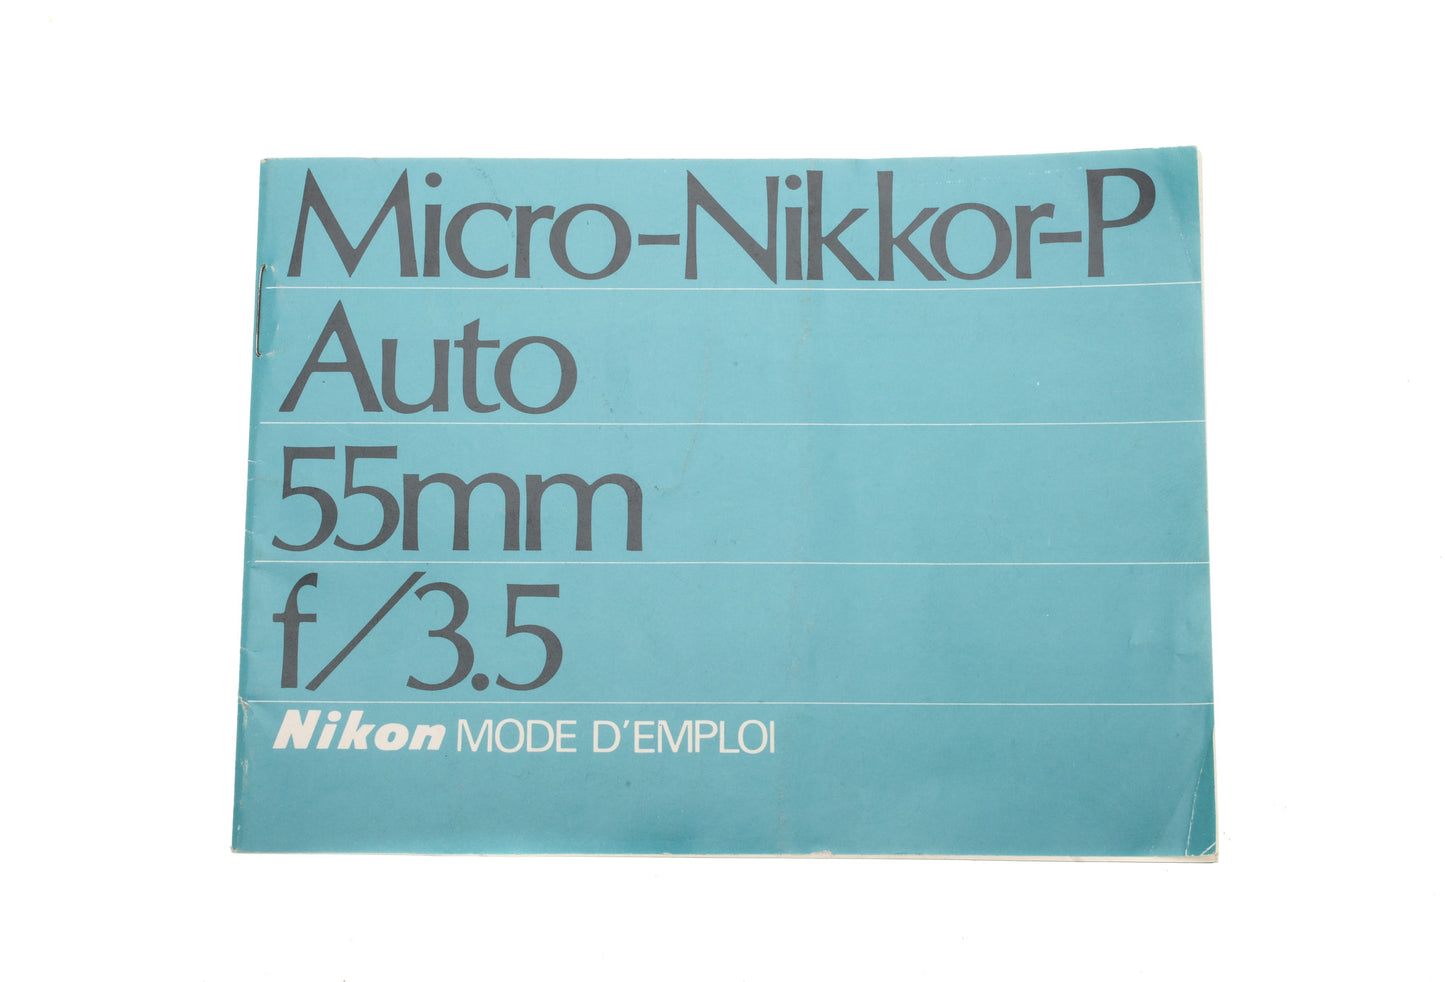 Nikon Micro-Nikkor-P Auto 55mm f/3.5 Instructions